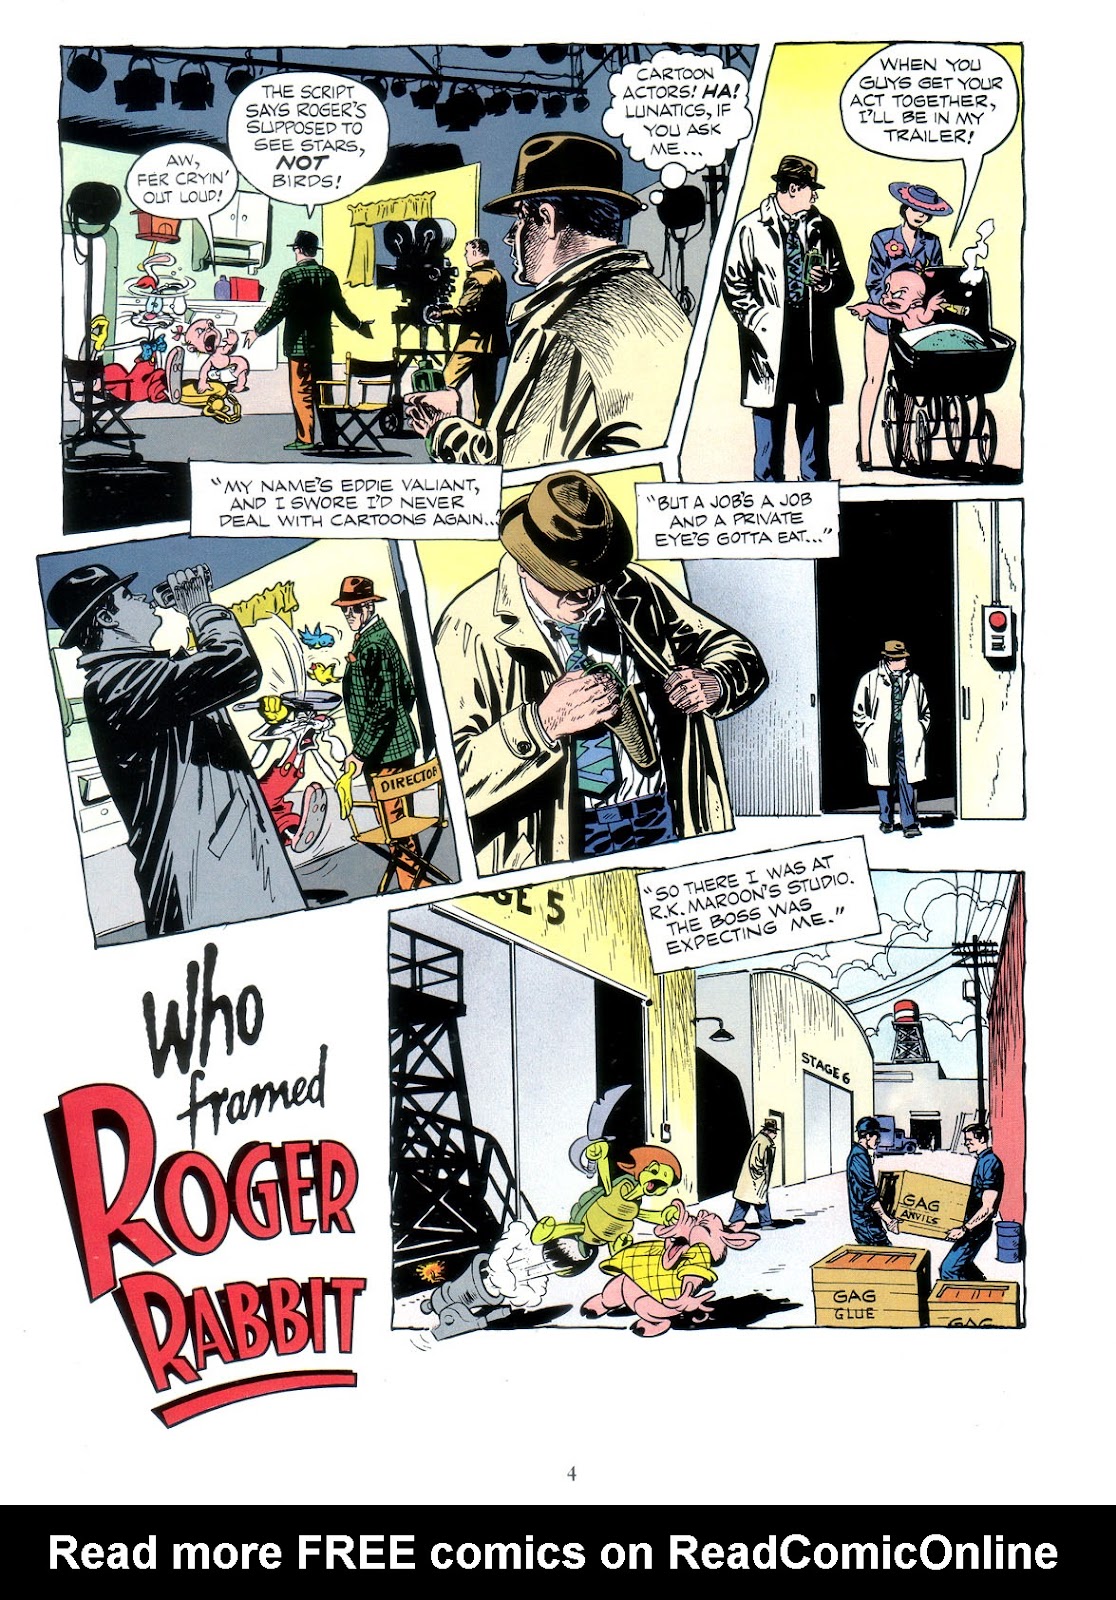 Marvel Graphic Novel issue 41 - Who Framed Roger Rabbit - Page 6